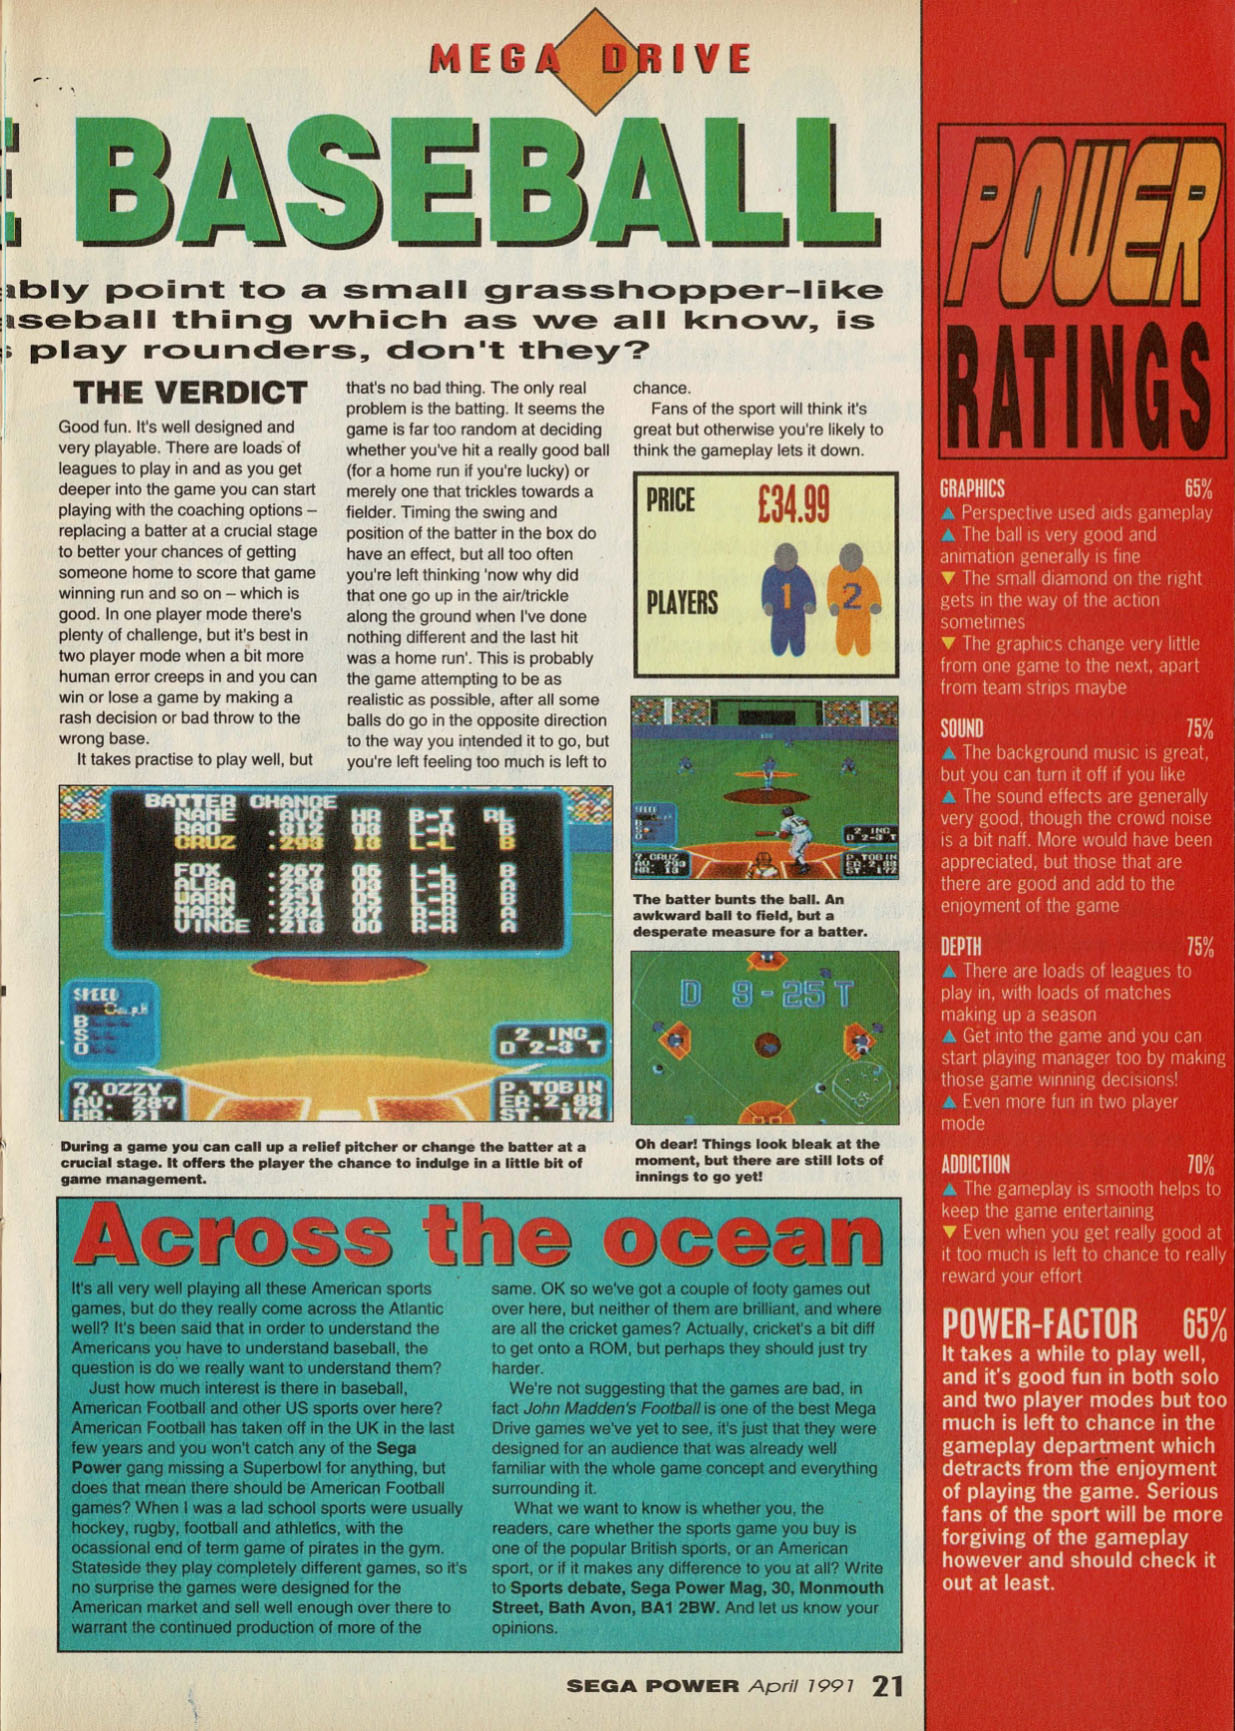 Super League Baseball Review, Sega Power April 1991 page 21